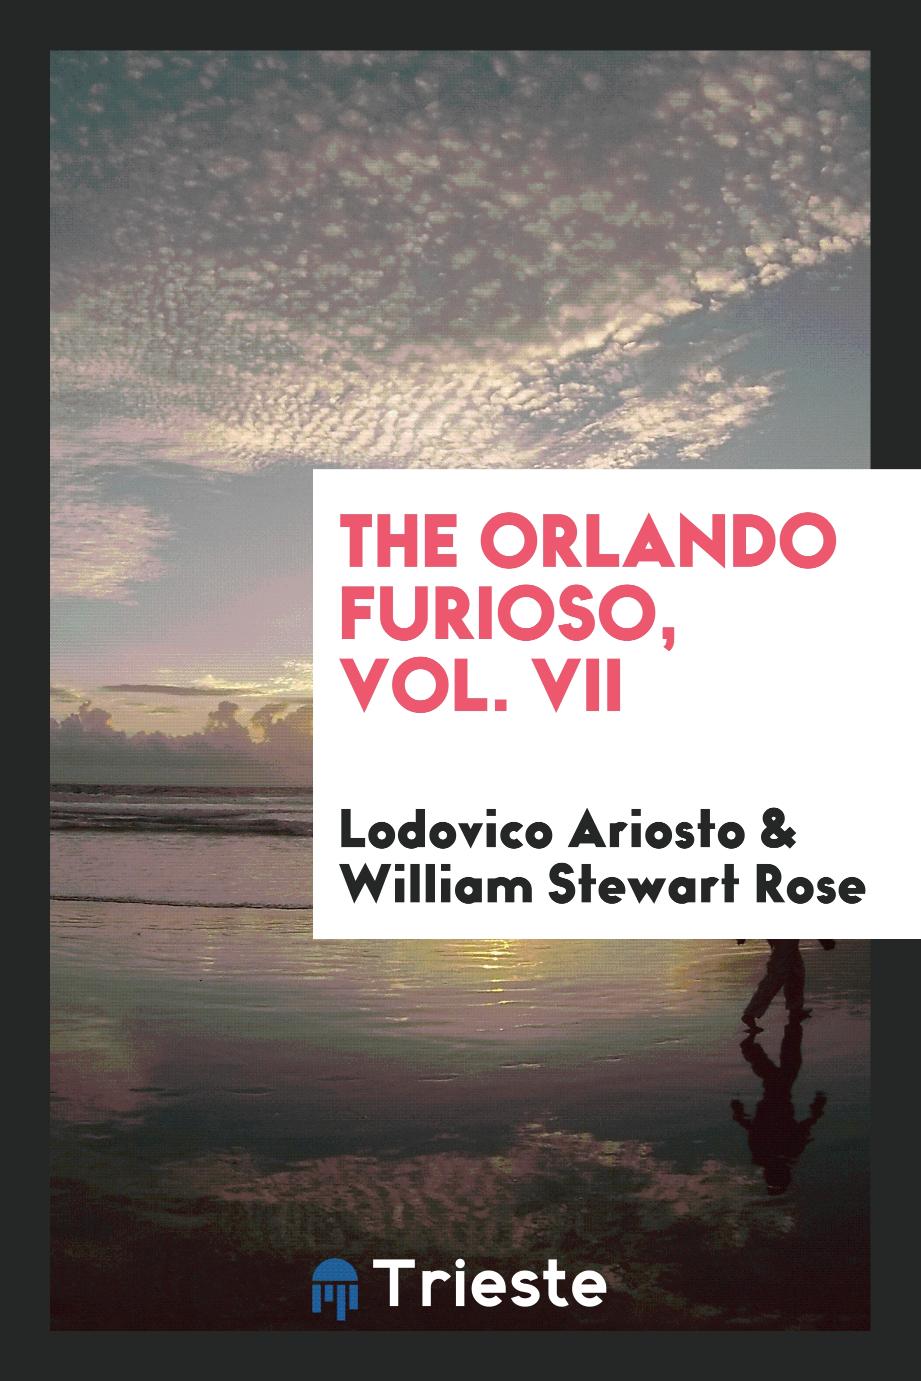 The Orlando Furioso, Vol. VII